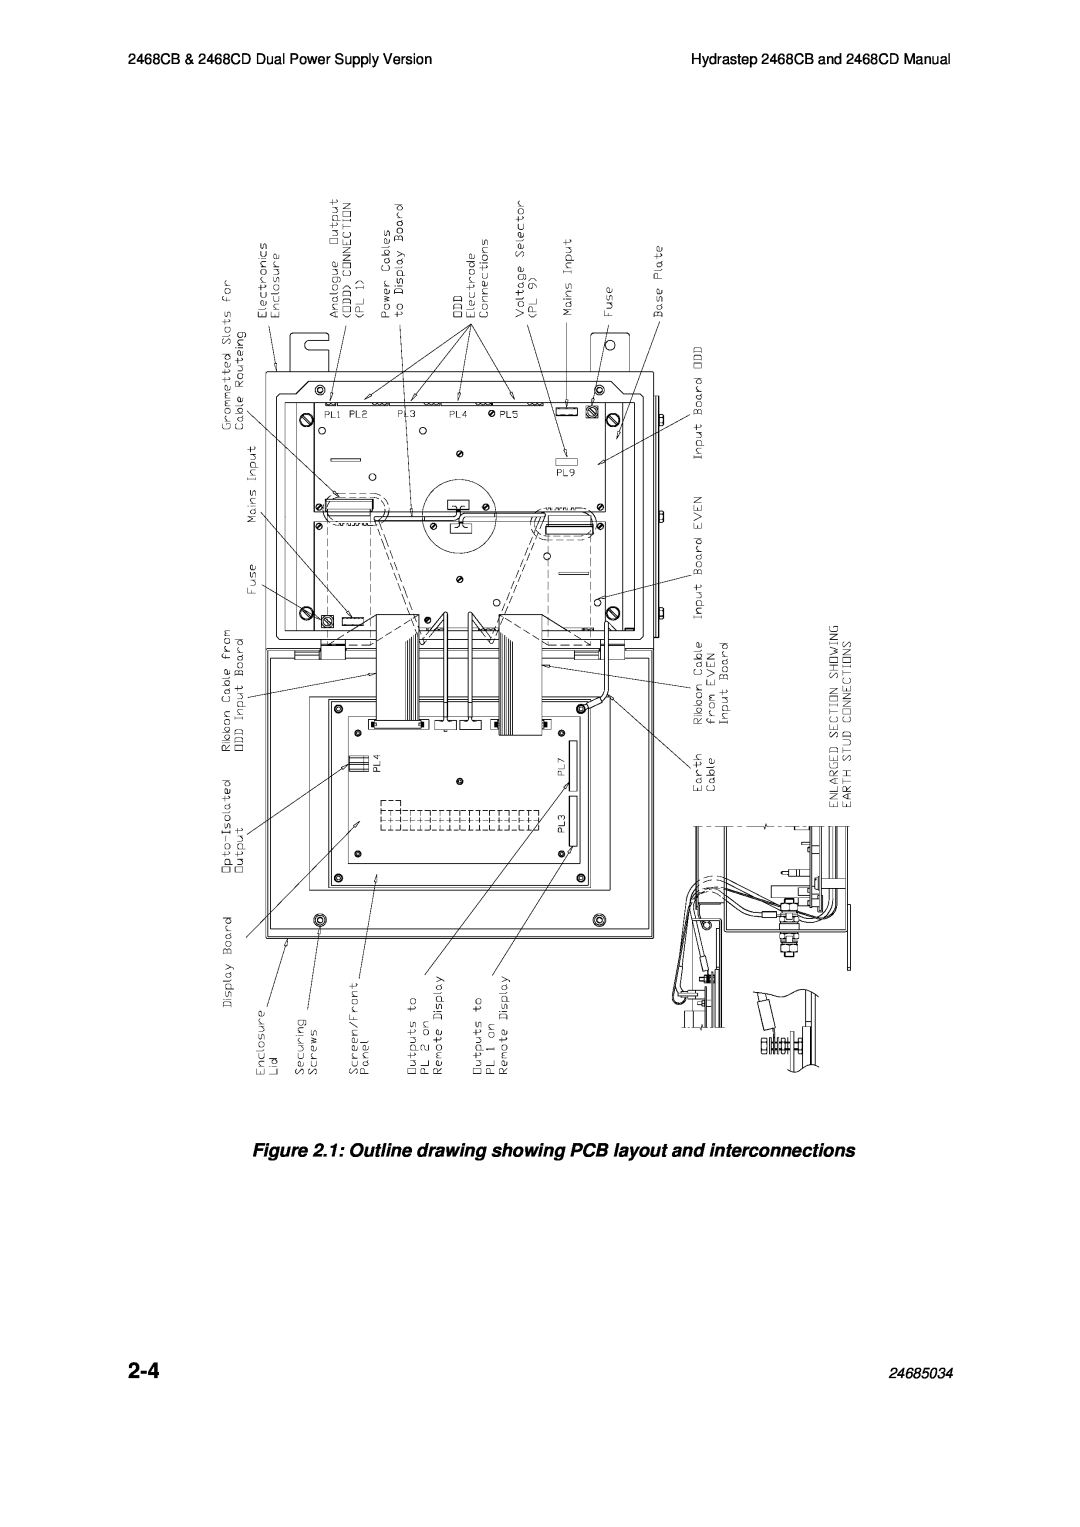 Emerson manual 2468CB & 2468CD Dual Power Supply Version, Hydrastep 2468CB and 2468CD Manual, 24685034 